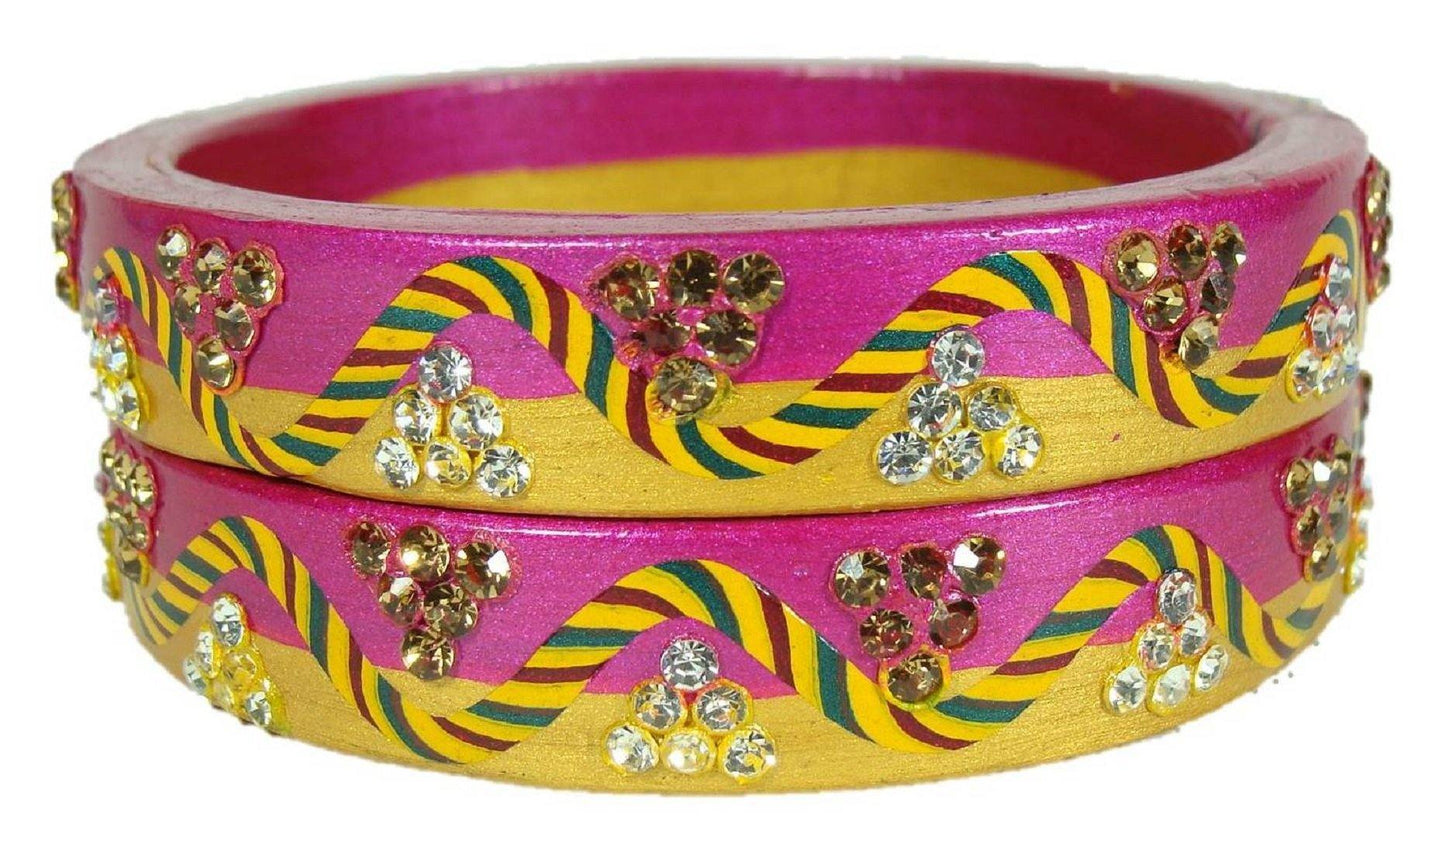 sukriti rajasthani lahariya golden-magenta lac bangles for women - set of 2